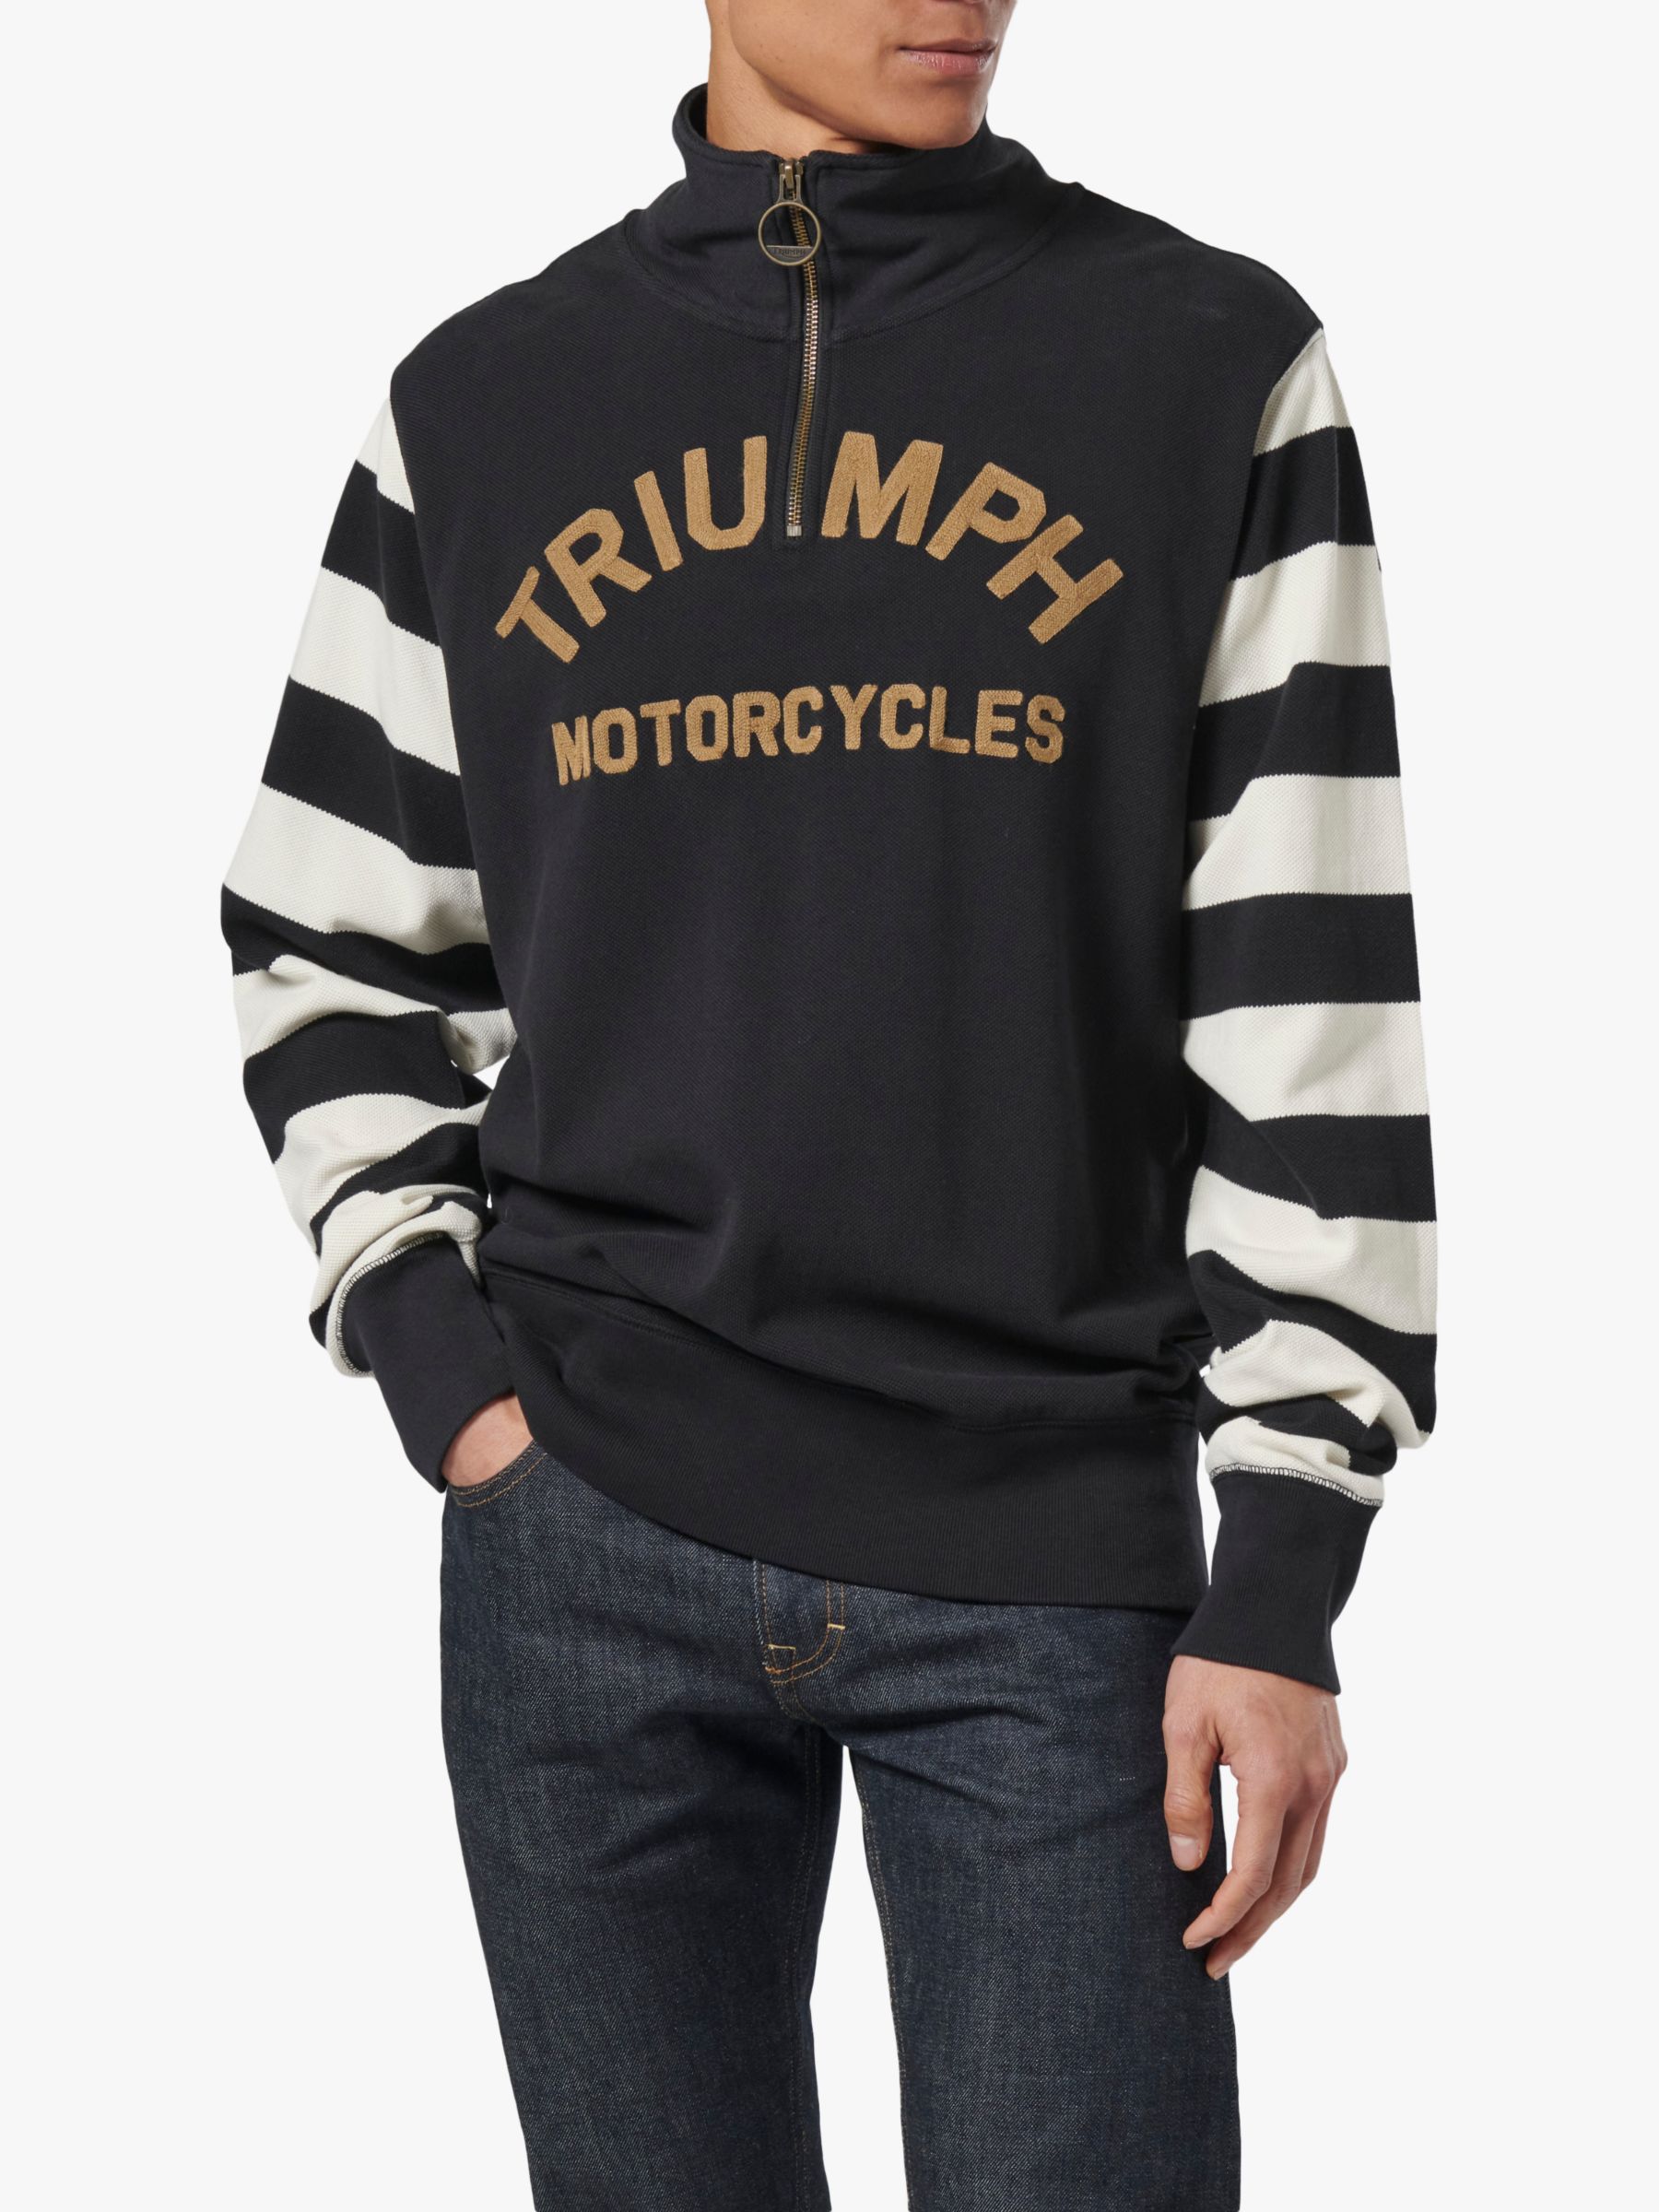 Triumph Motorcycles Highly Quarter Zip Sweatshirt, Black, S